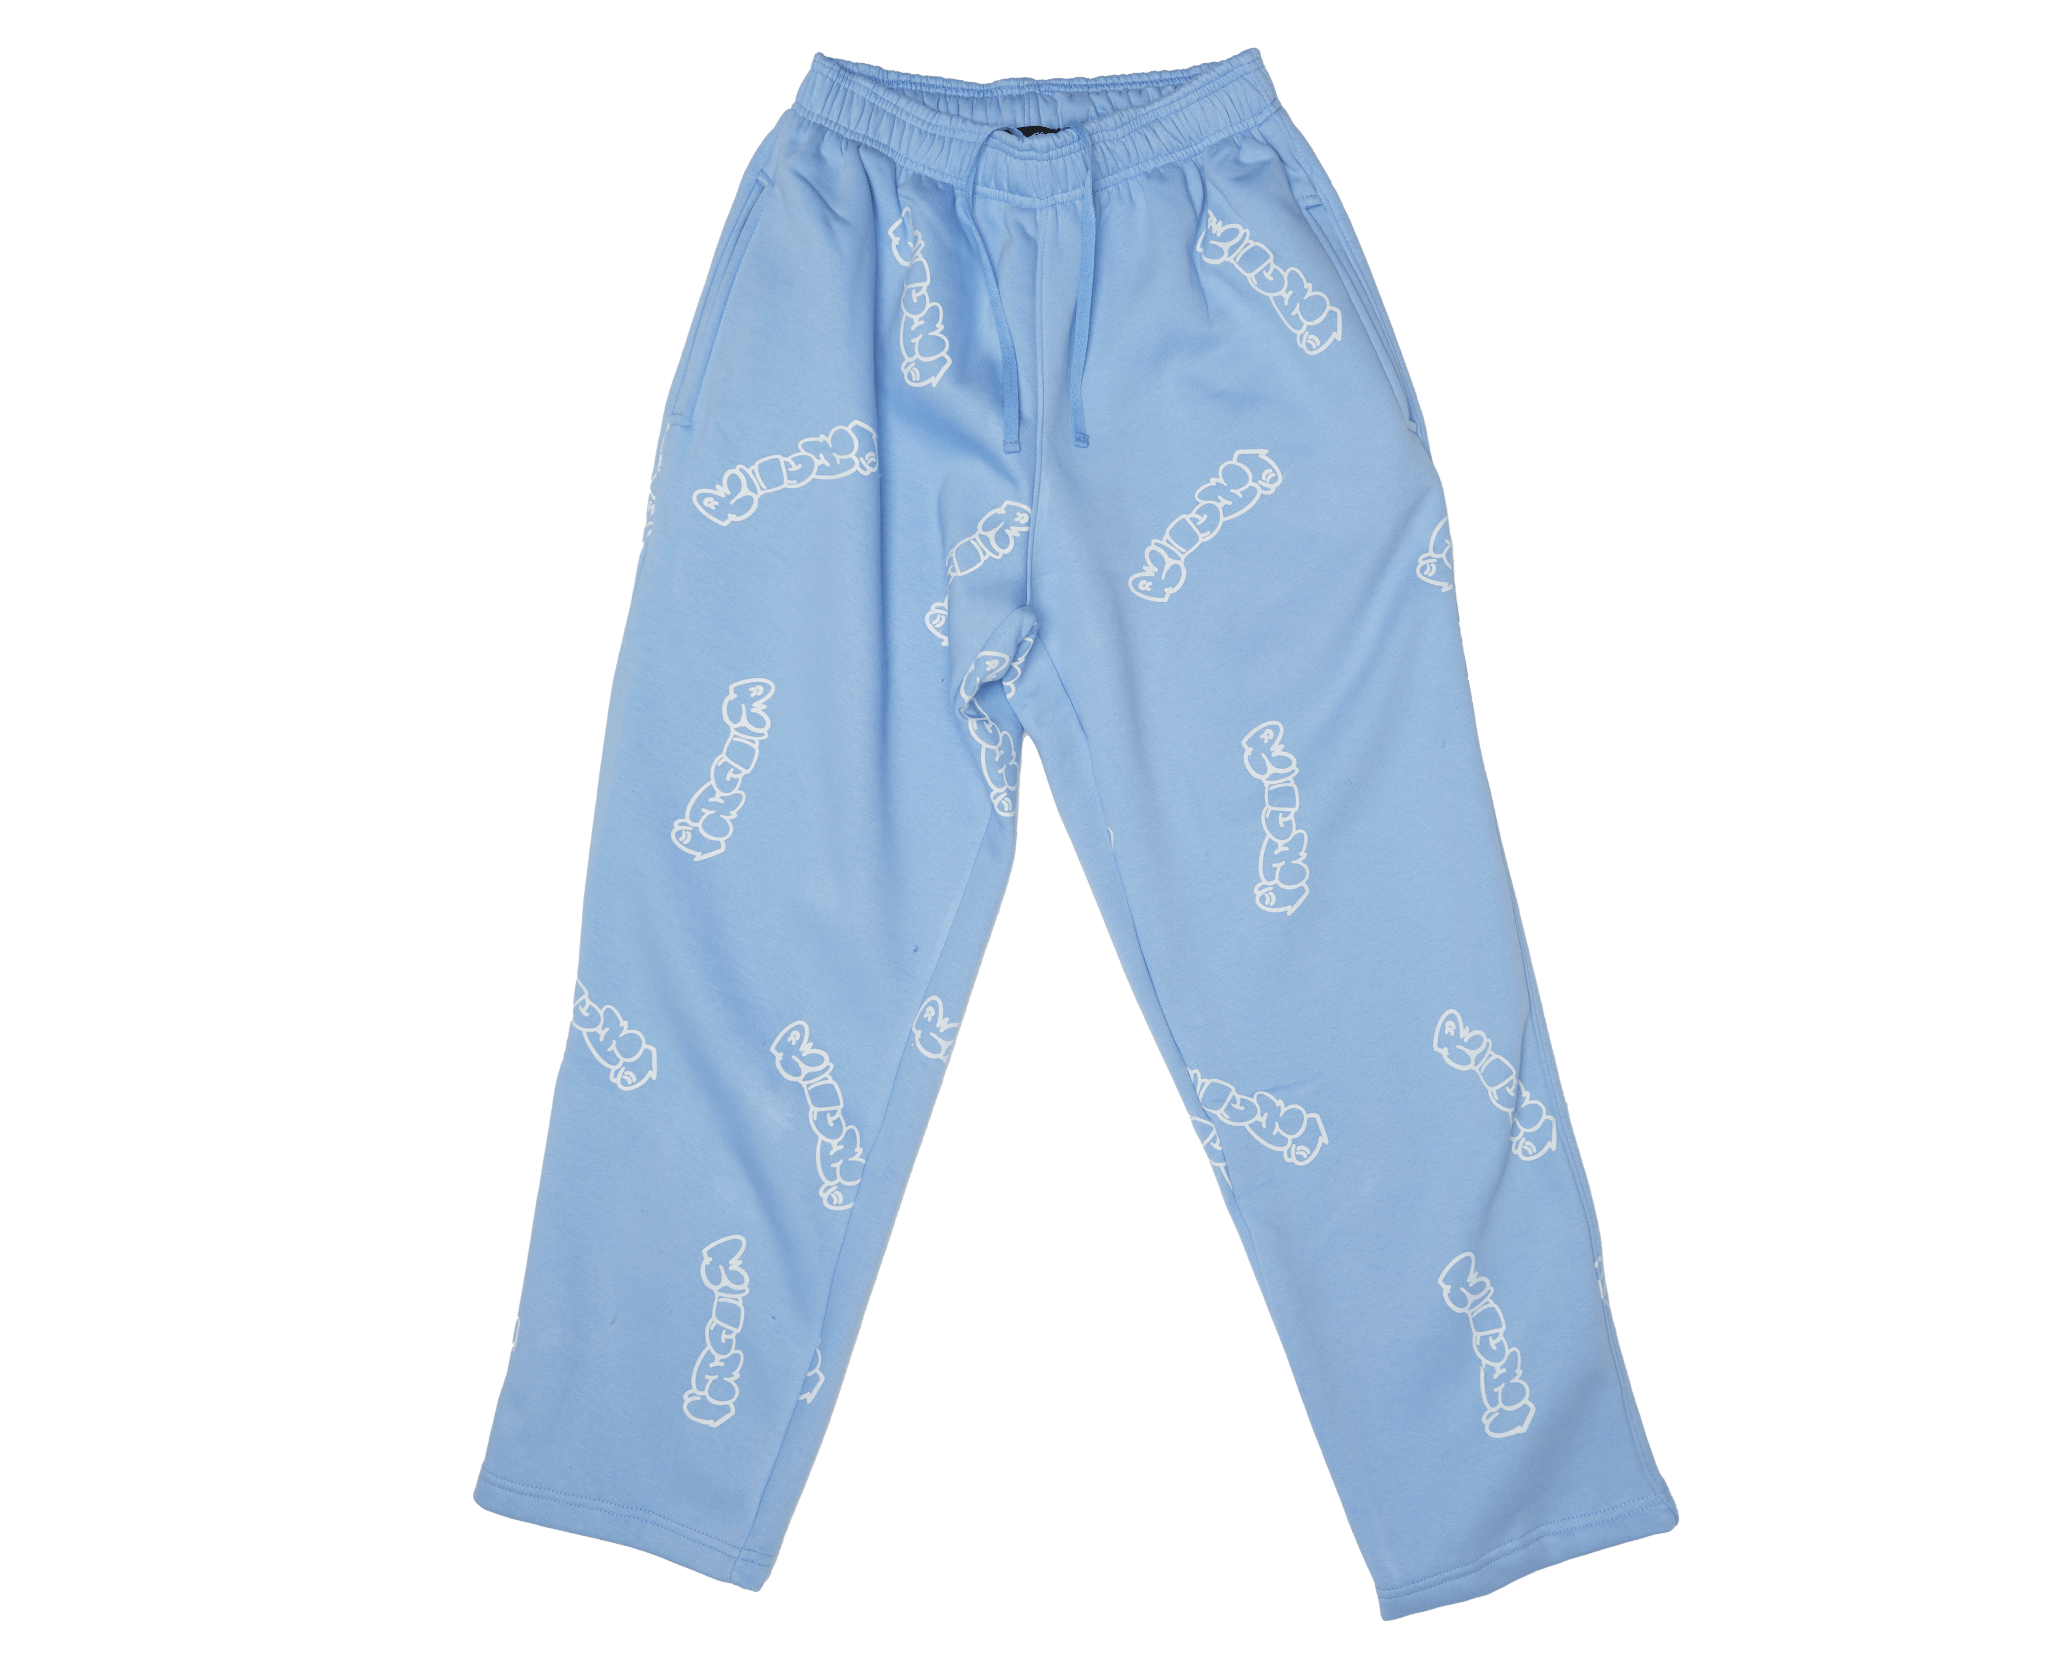 Patterned Blue Richa Sweatpants - Richa UAE